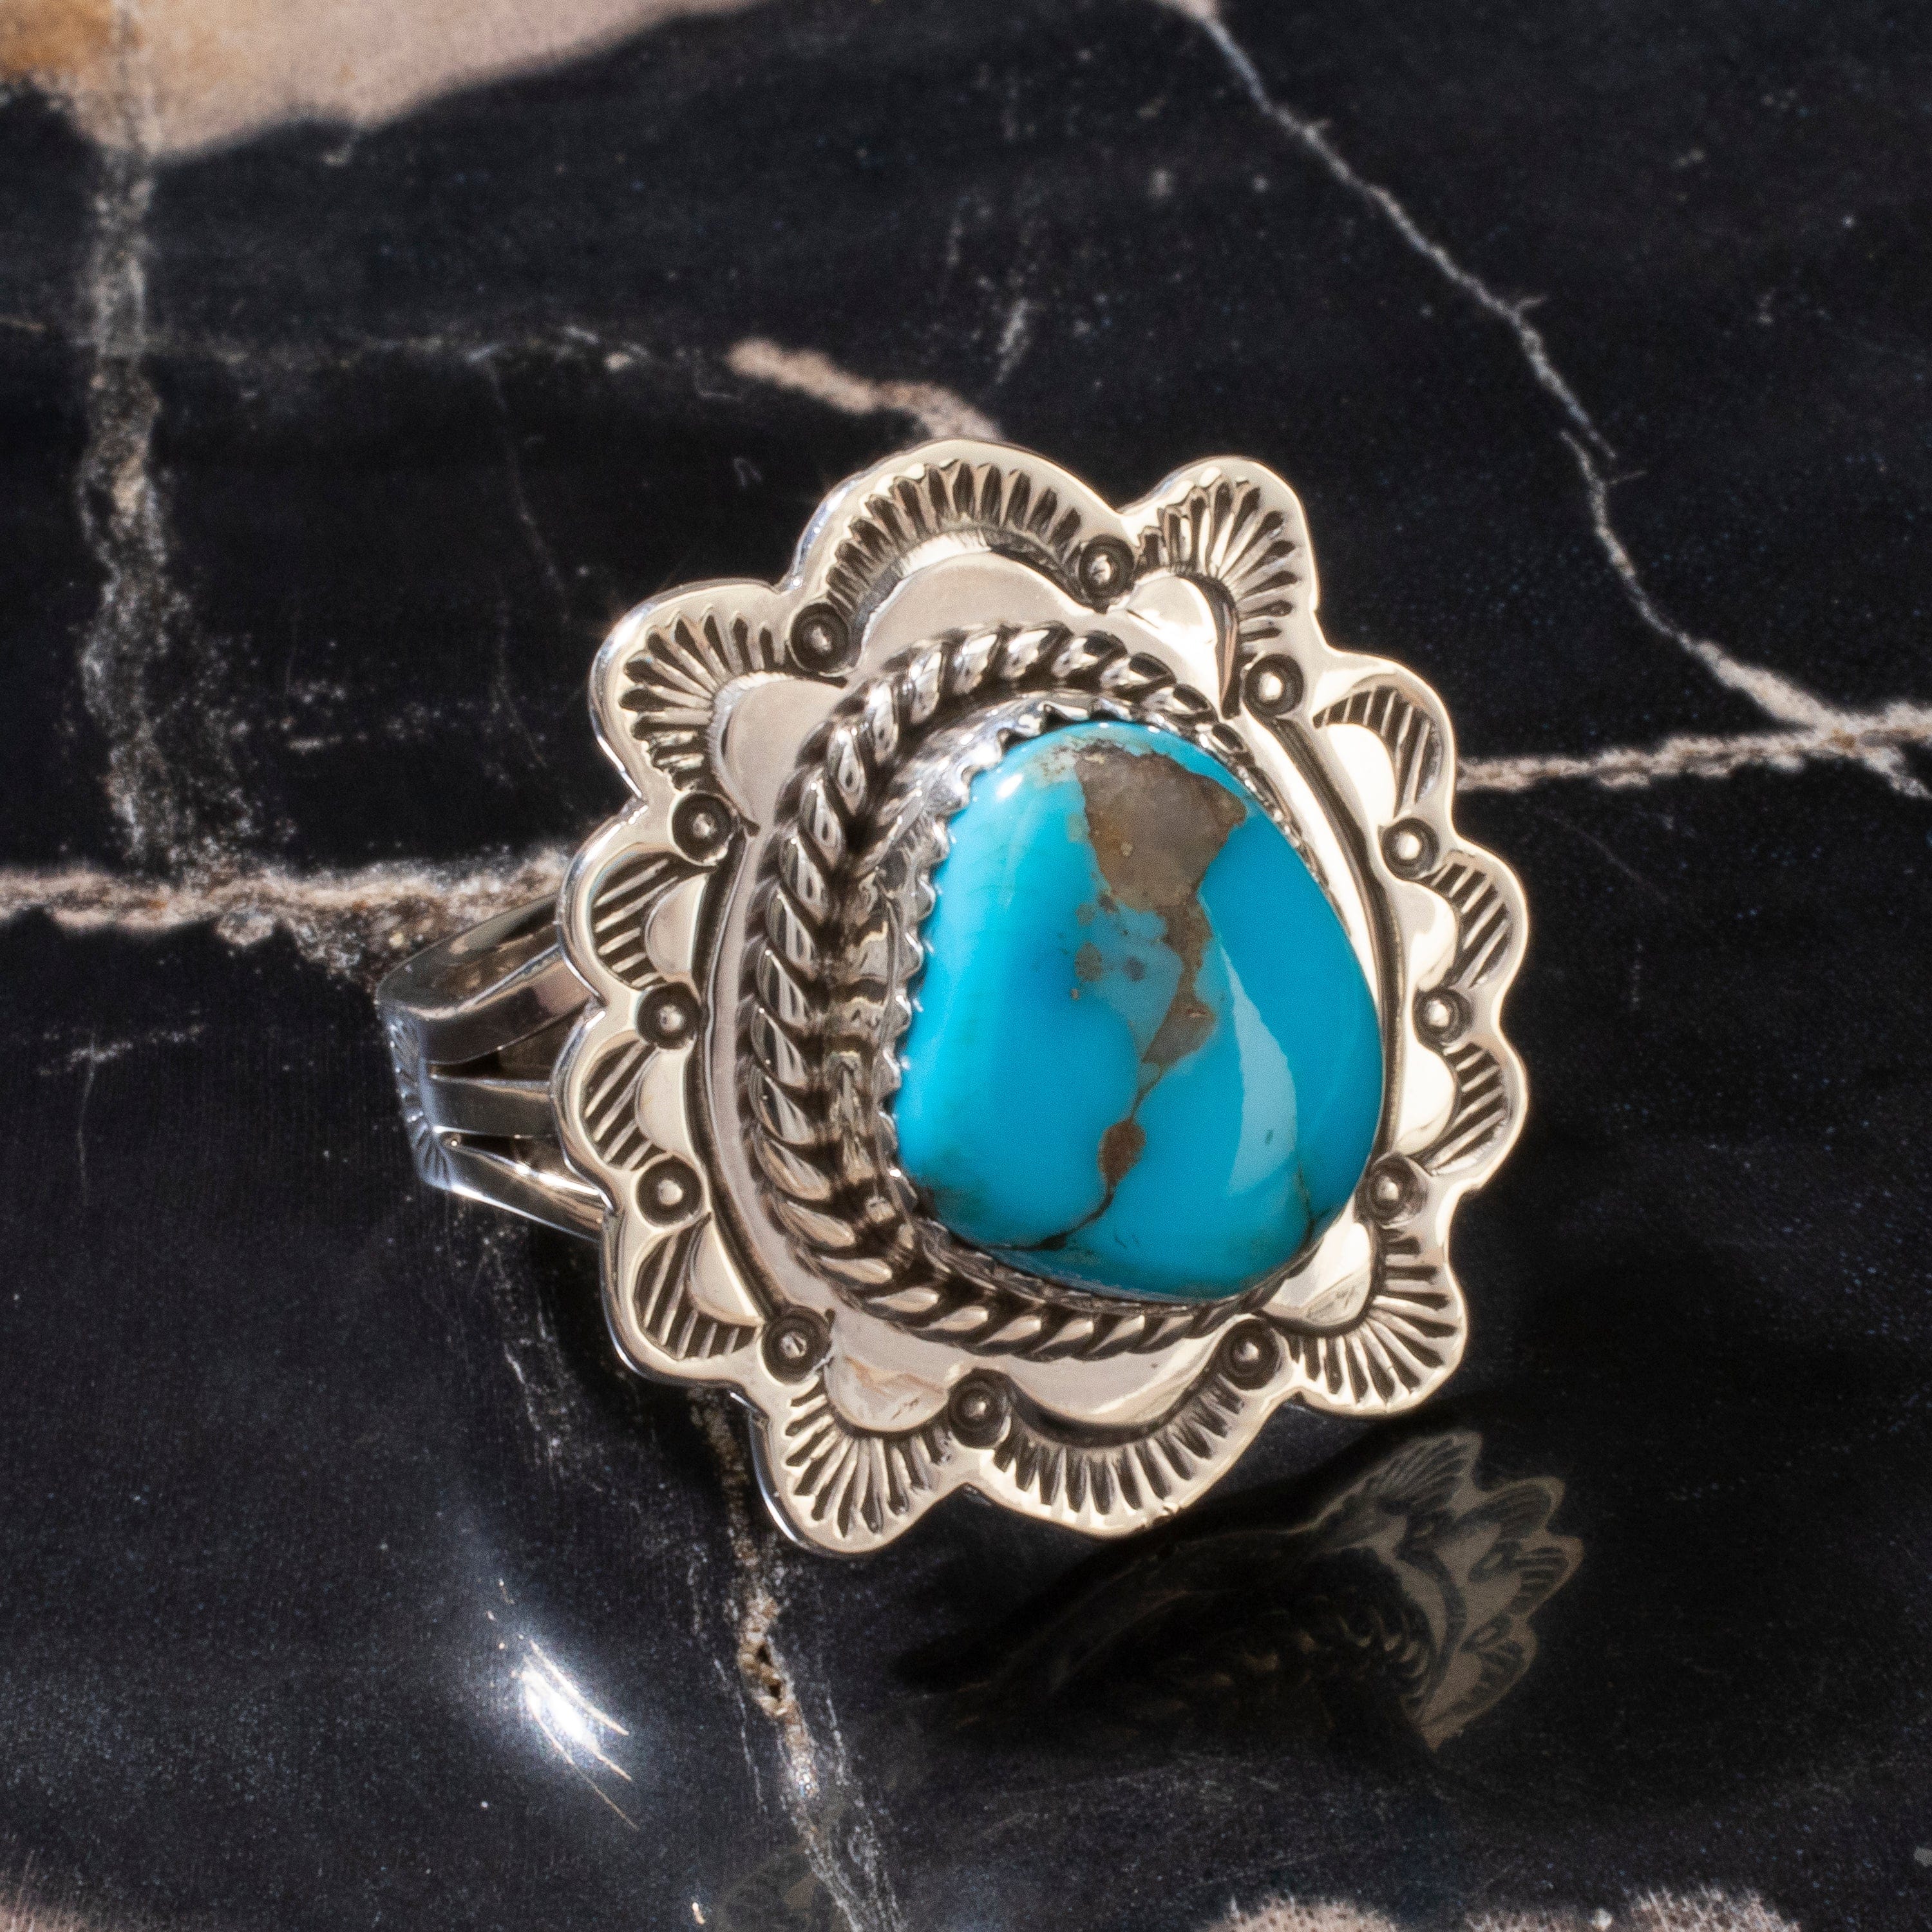 Kalifano Native American Jewelry 10 Joe Piaso Jr. Sleeping Beauty Turquoise Navajo USA Native American Made 925 Sterling Silver Ring NAR600.077.10